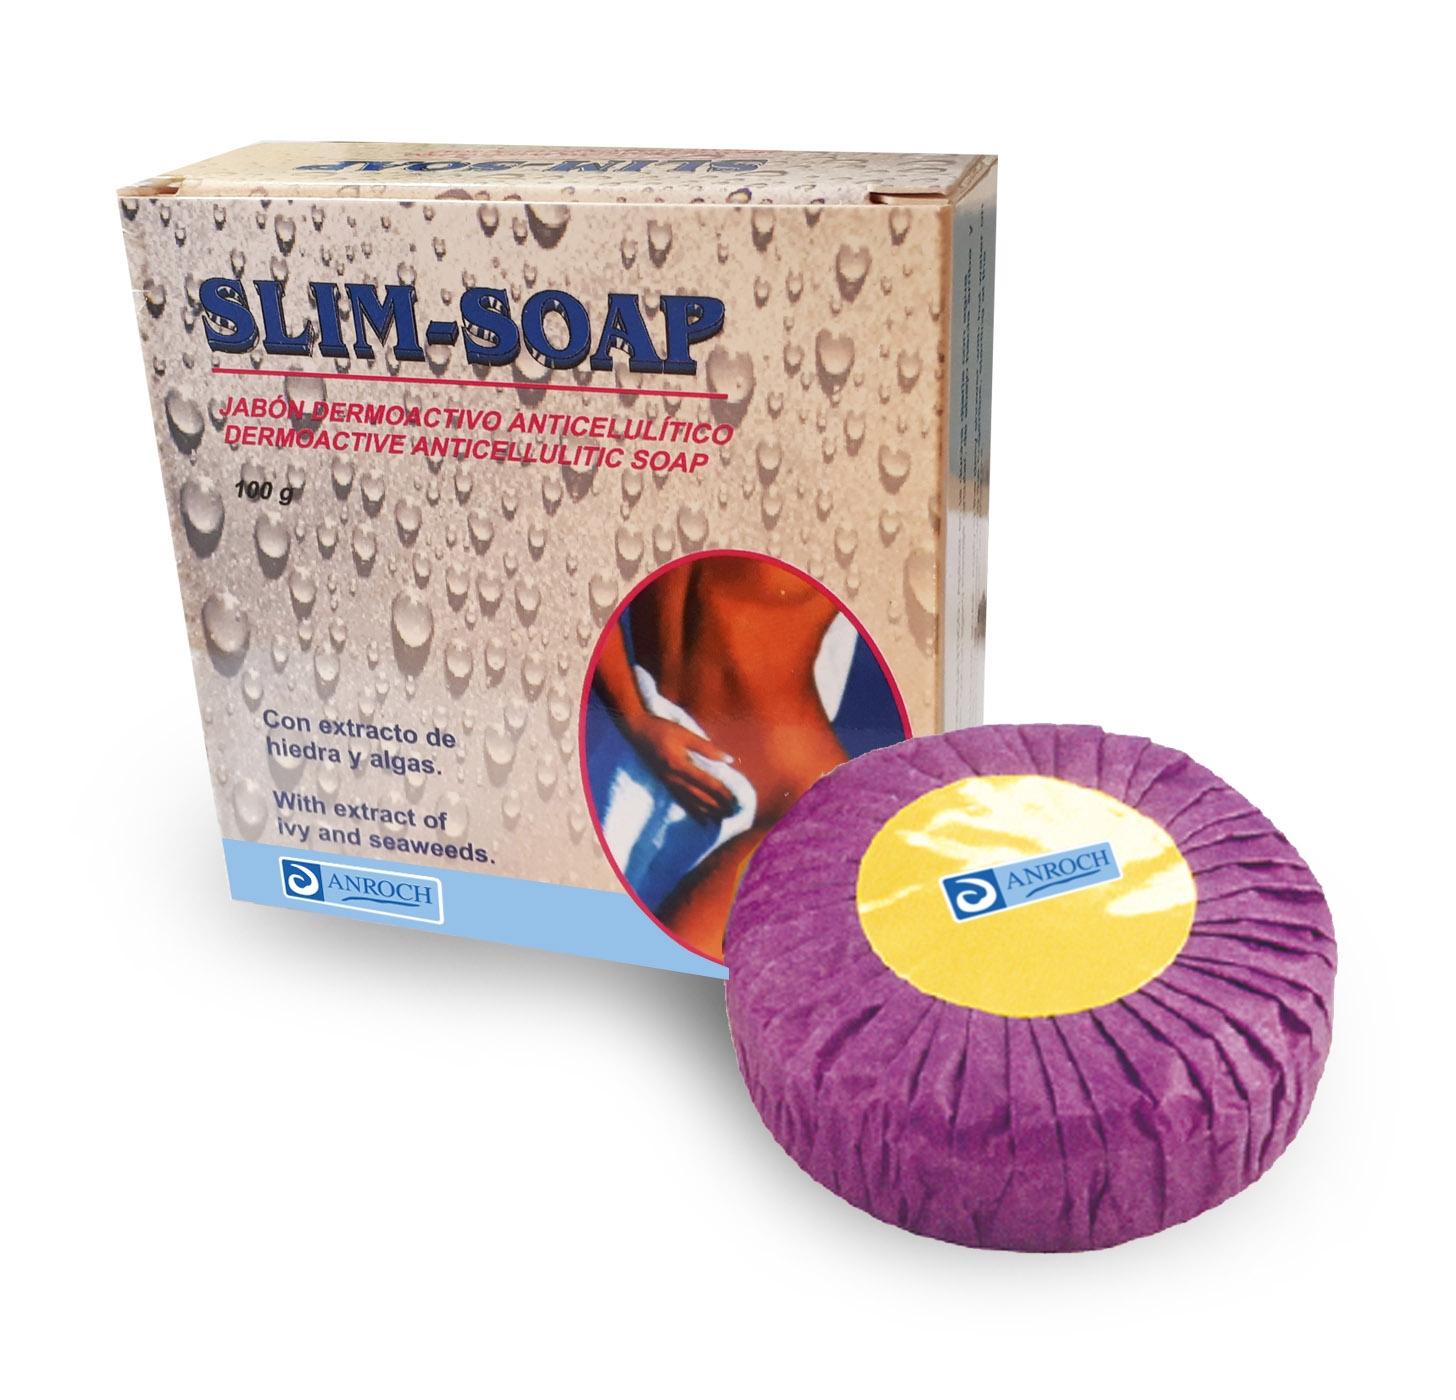 SLIM SOAP, jabón anticelulítico 100 g.